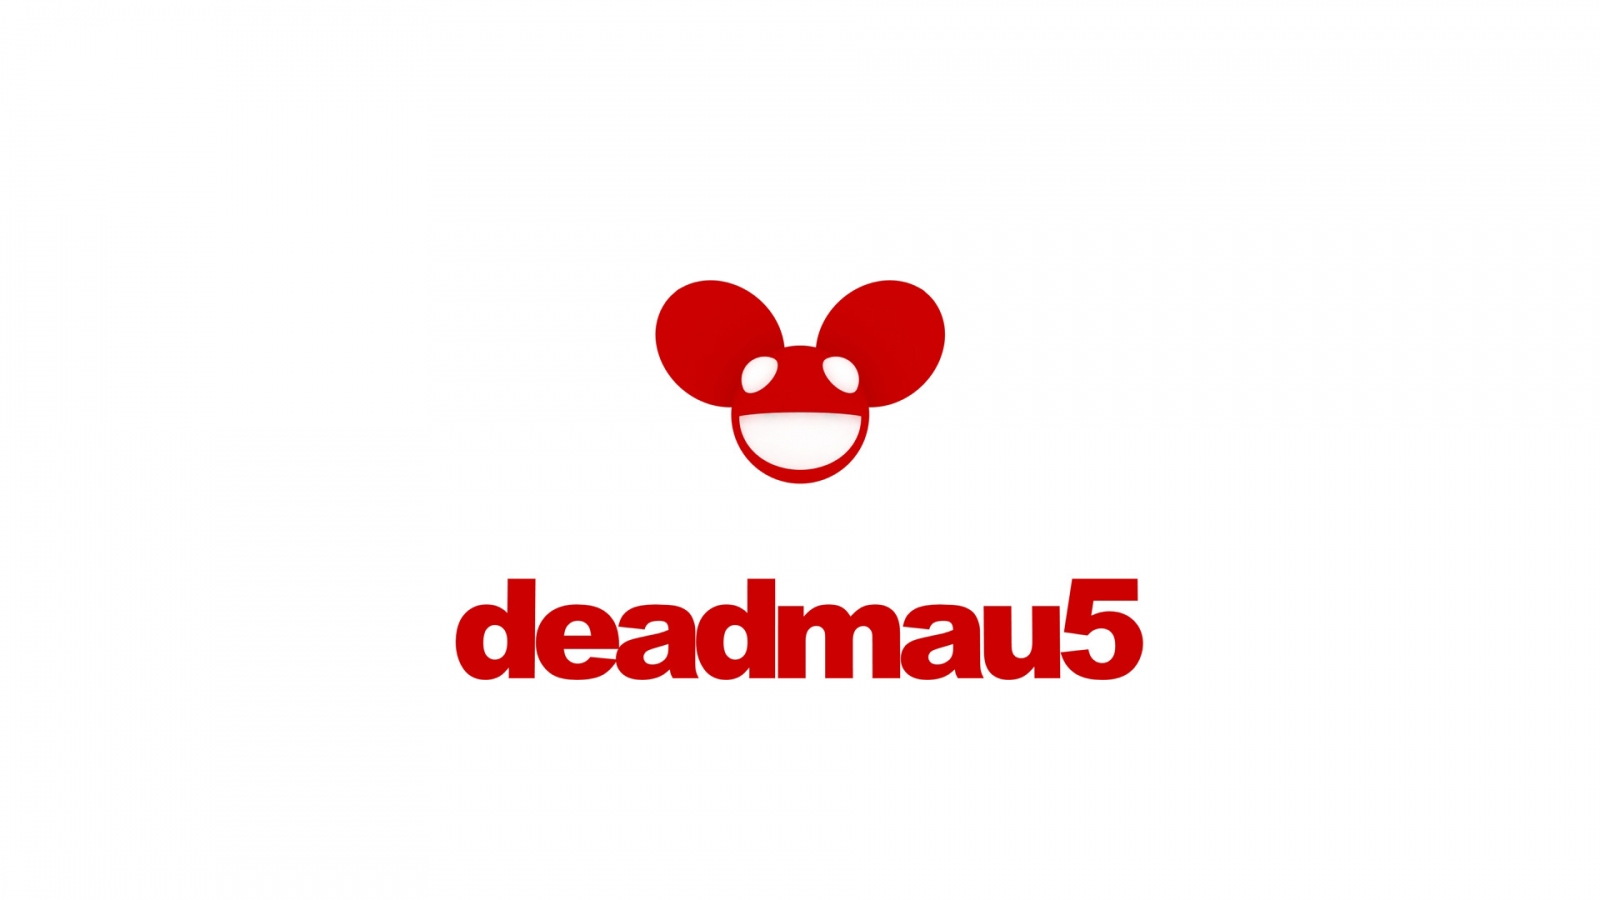 Deadmau5 Logo for 1600 x 900 HDTV resolution